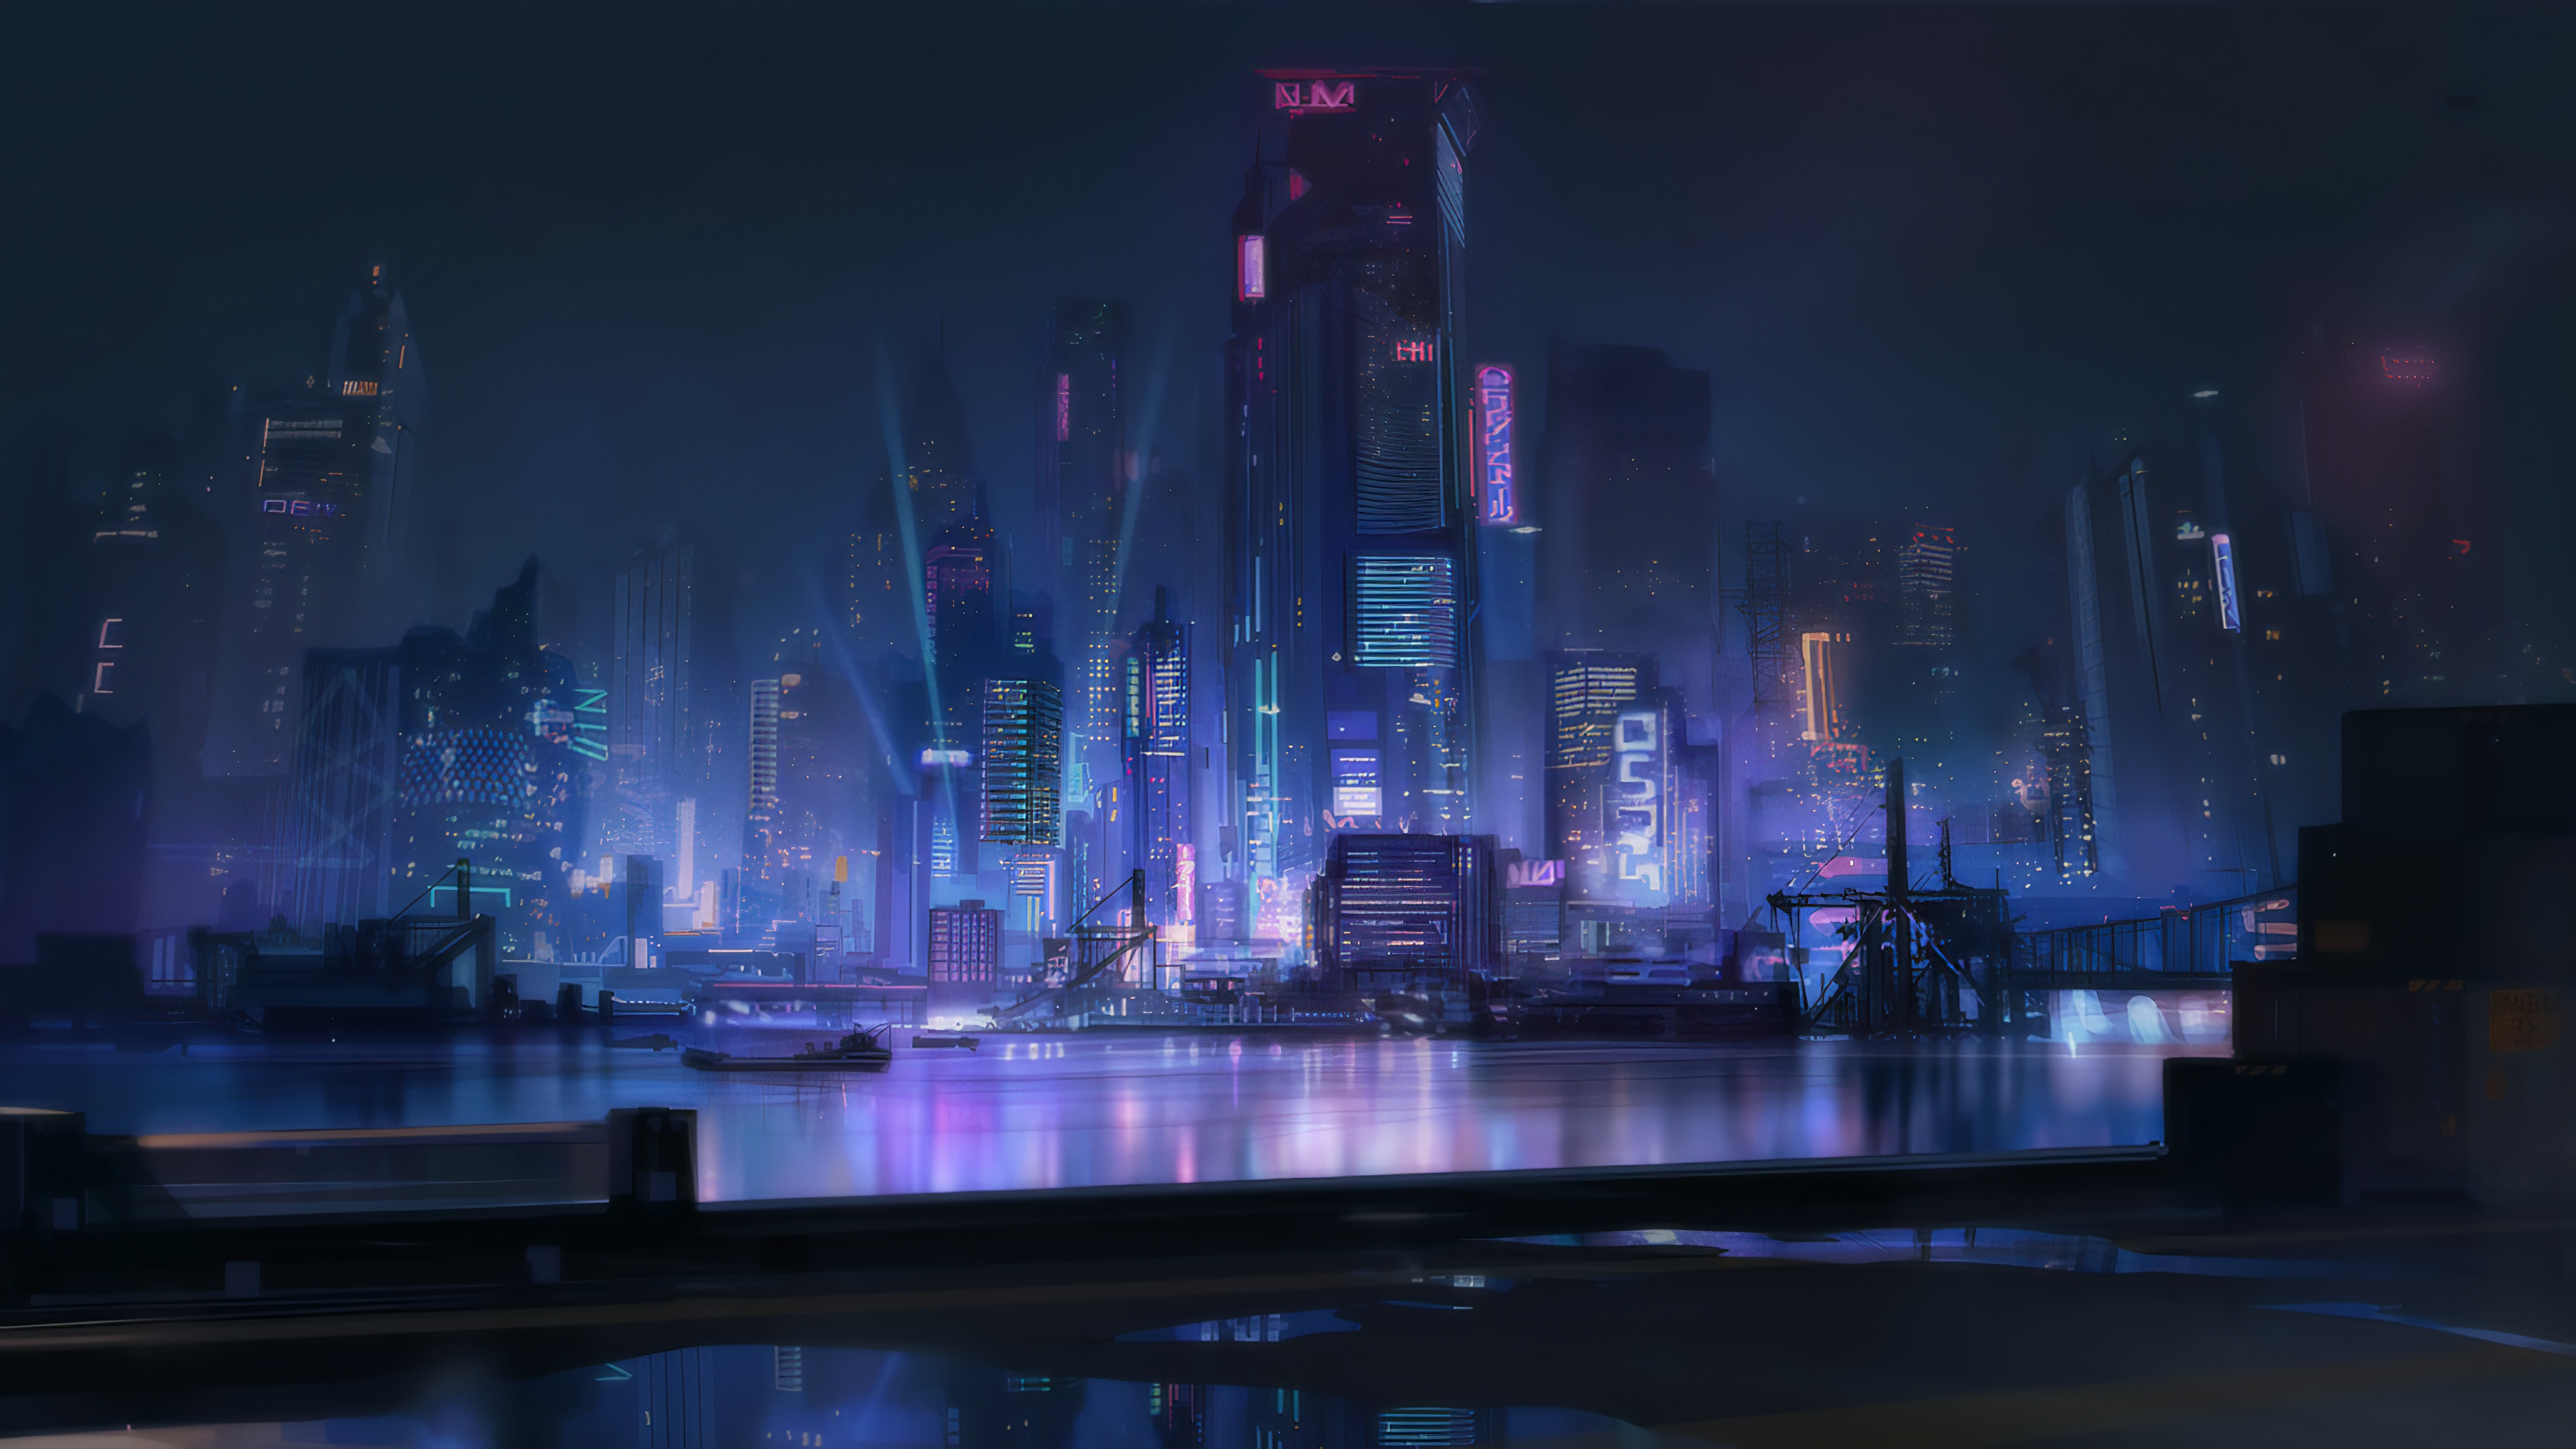 General 4096x2304 city night cityscape futuristic city futuristic science fiction skyline Arknights digital art low light